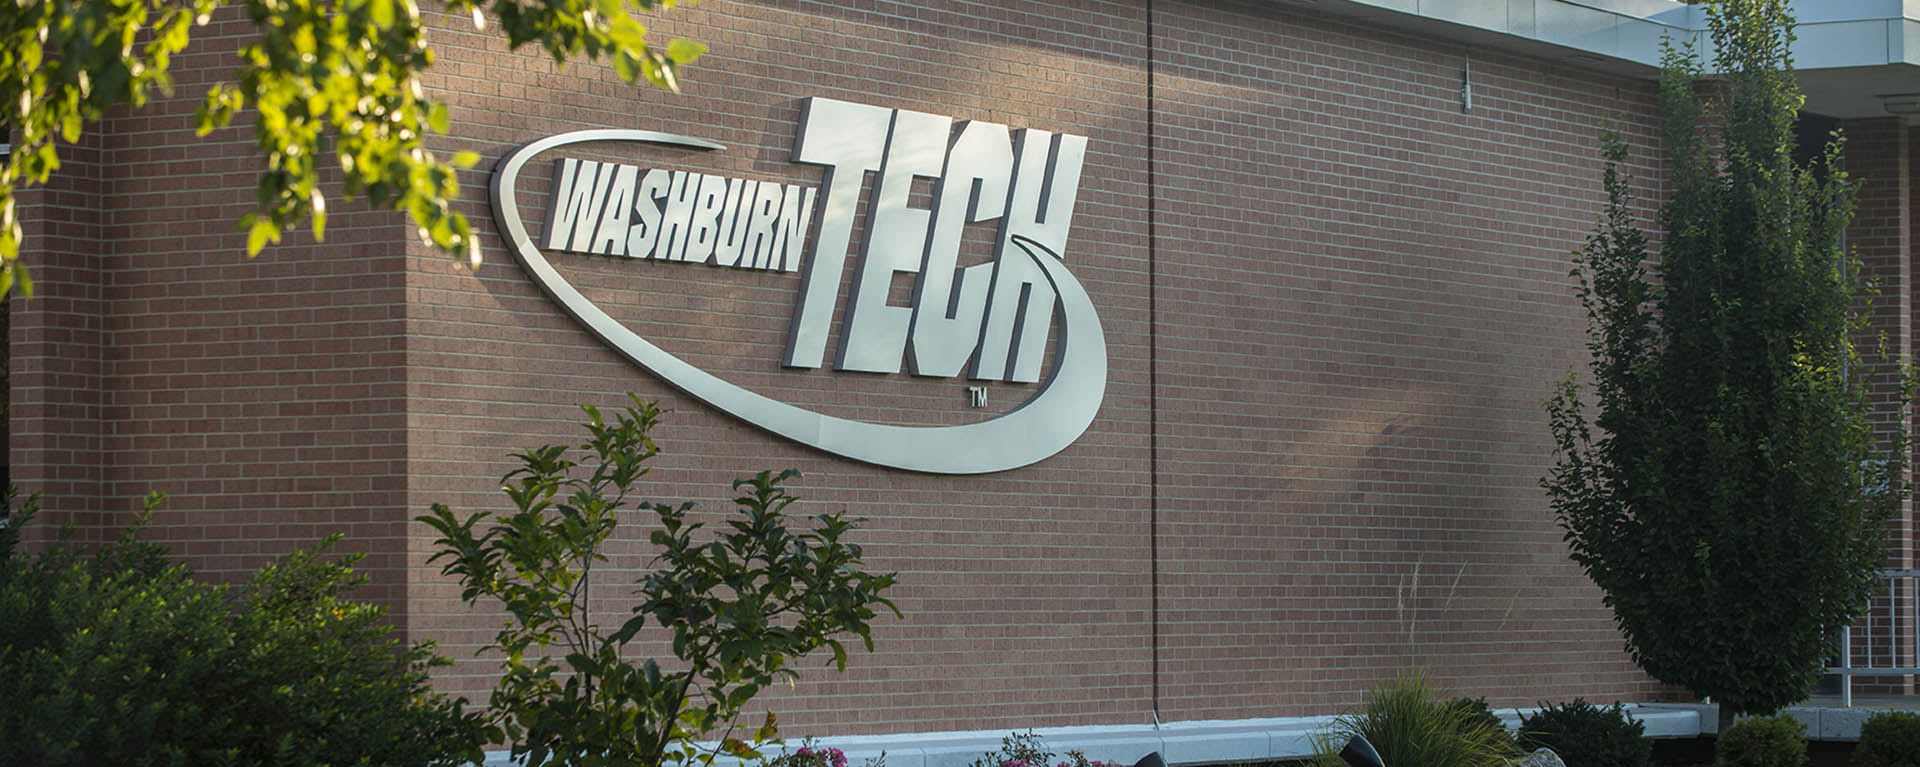 Kansas Technical Schools Technical Programs In Topeka, KS Washburn Tech